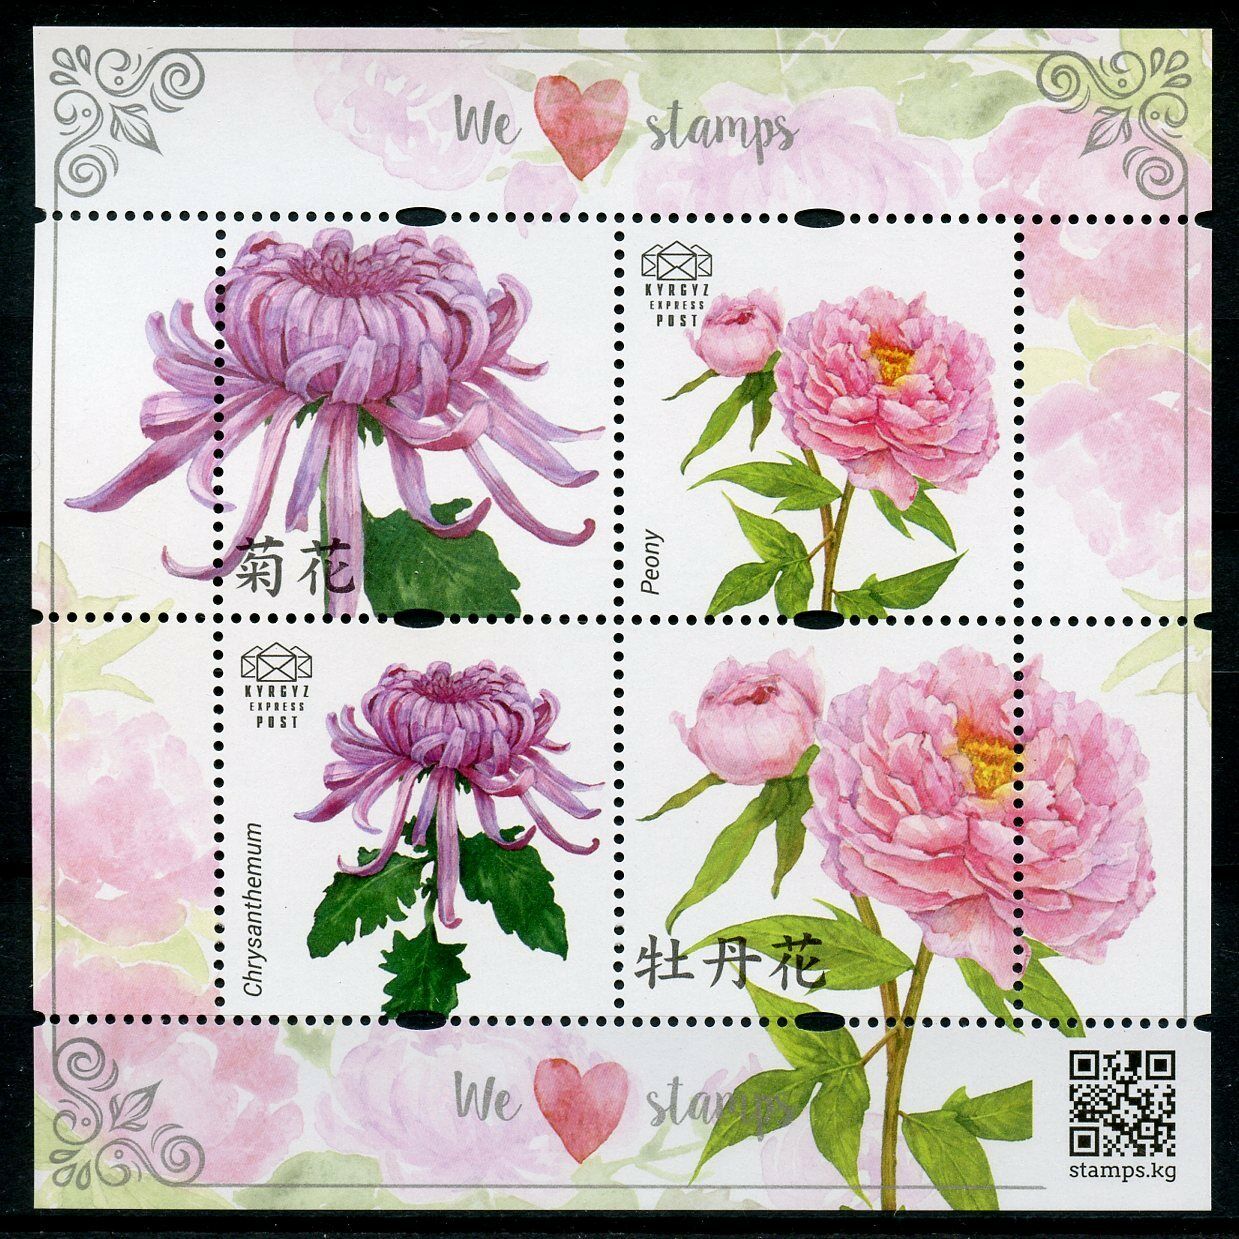 Kyrgyzstan KEP 2018 MNH Flowers Roses Peonies Crysanthemum Promotional Stamps